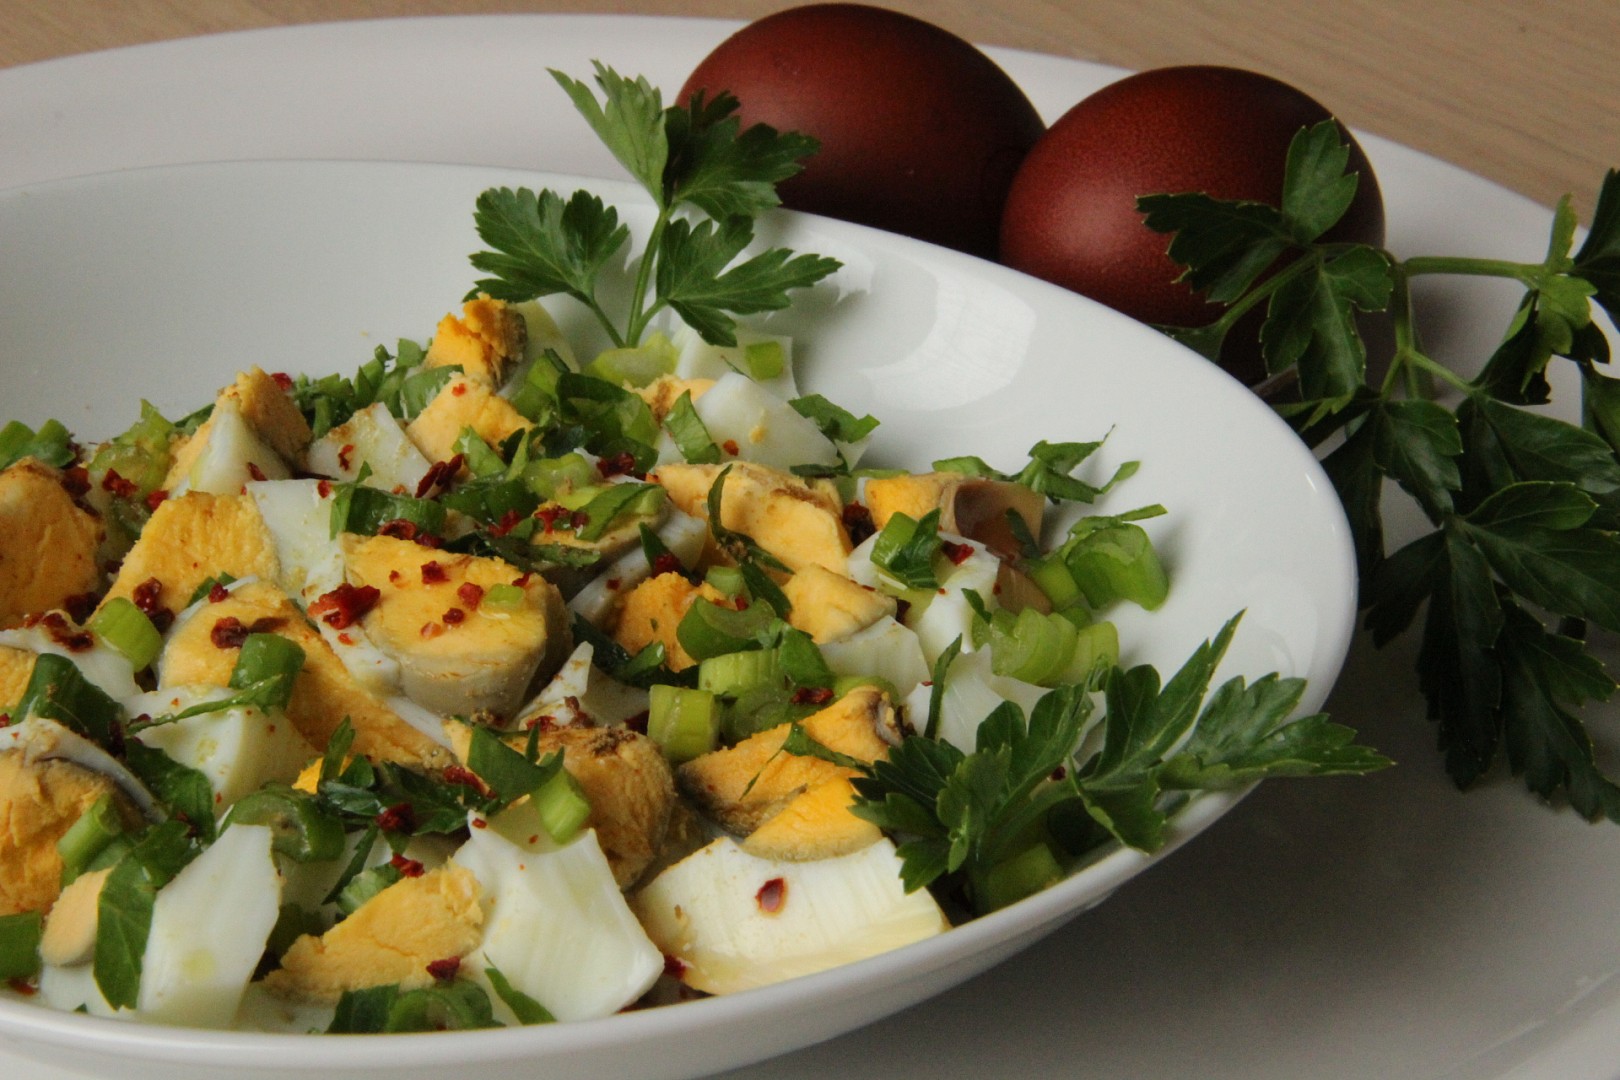 Turecký vajíčkový salát (Yumurta piyazi)